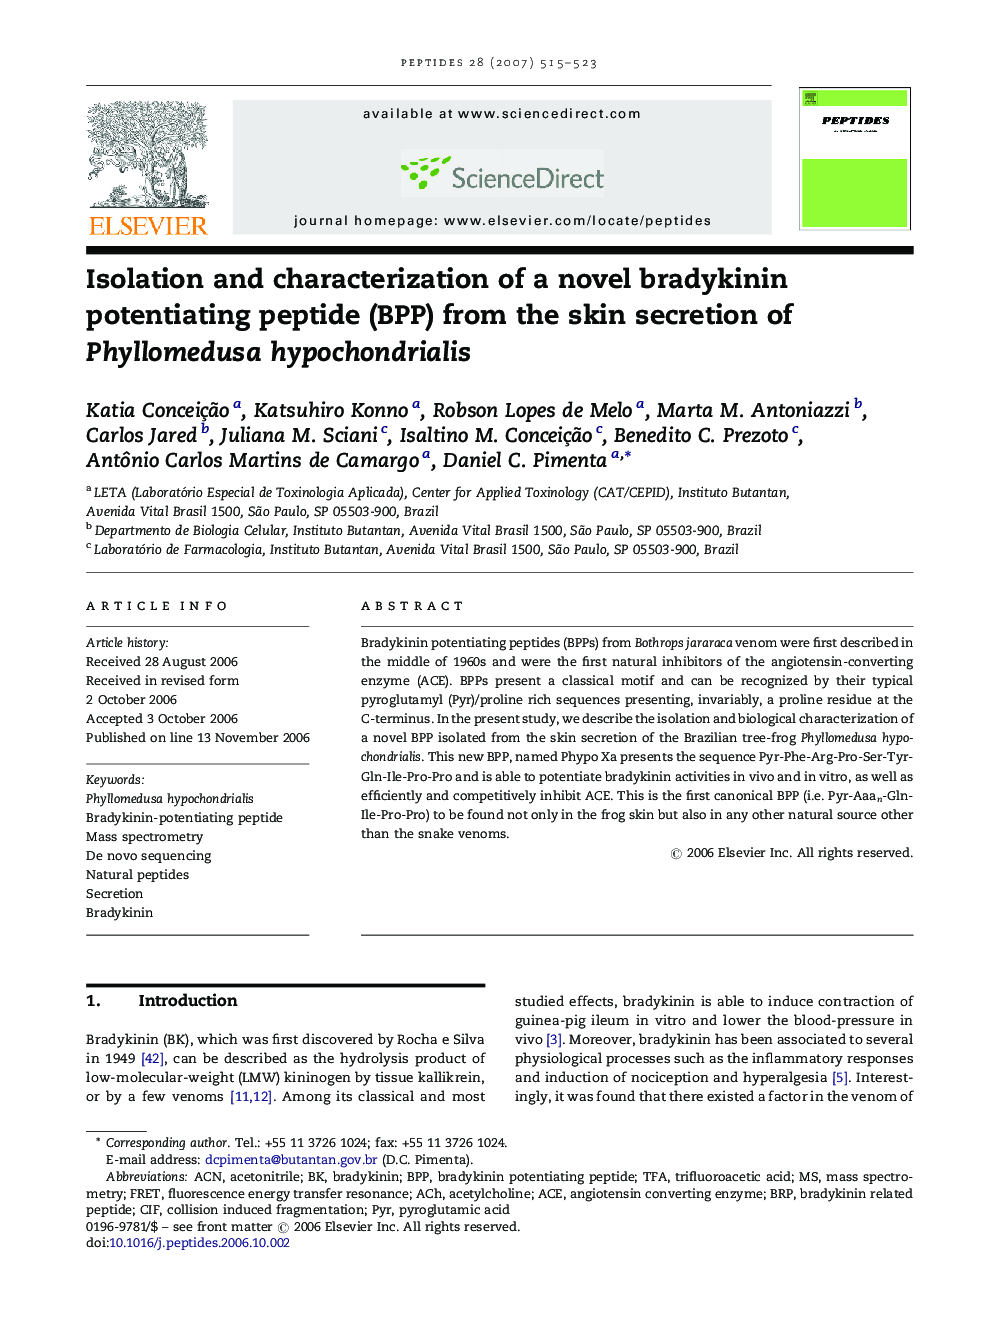 Isolation and characterization of a novel bradykinin potentiating peptide (BPP) from the skin secretion of Phyllomedusa hypochondrialis